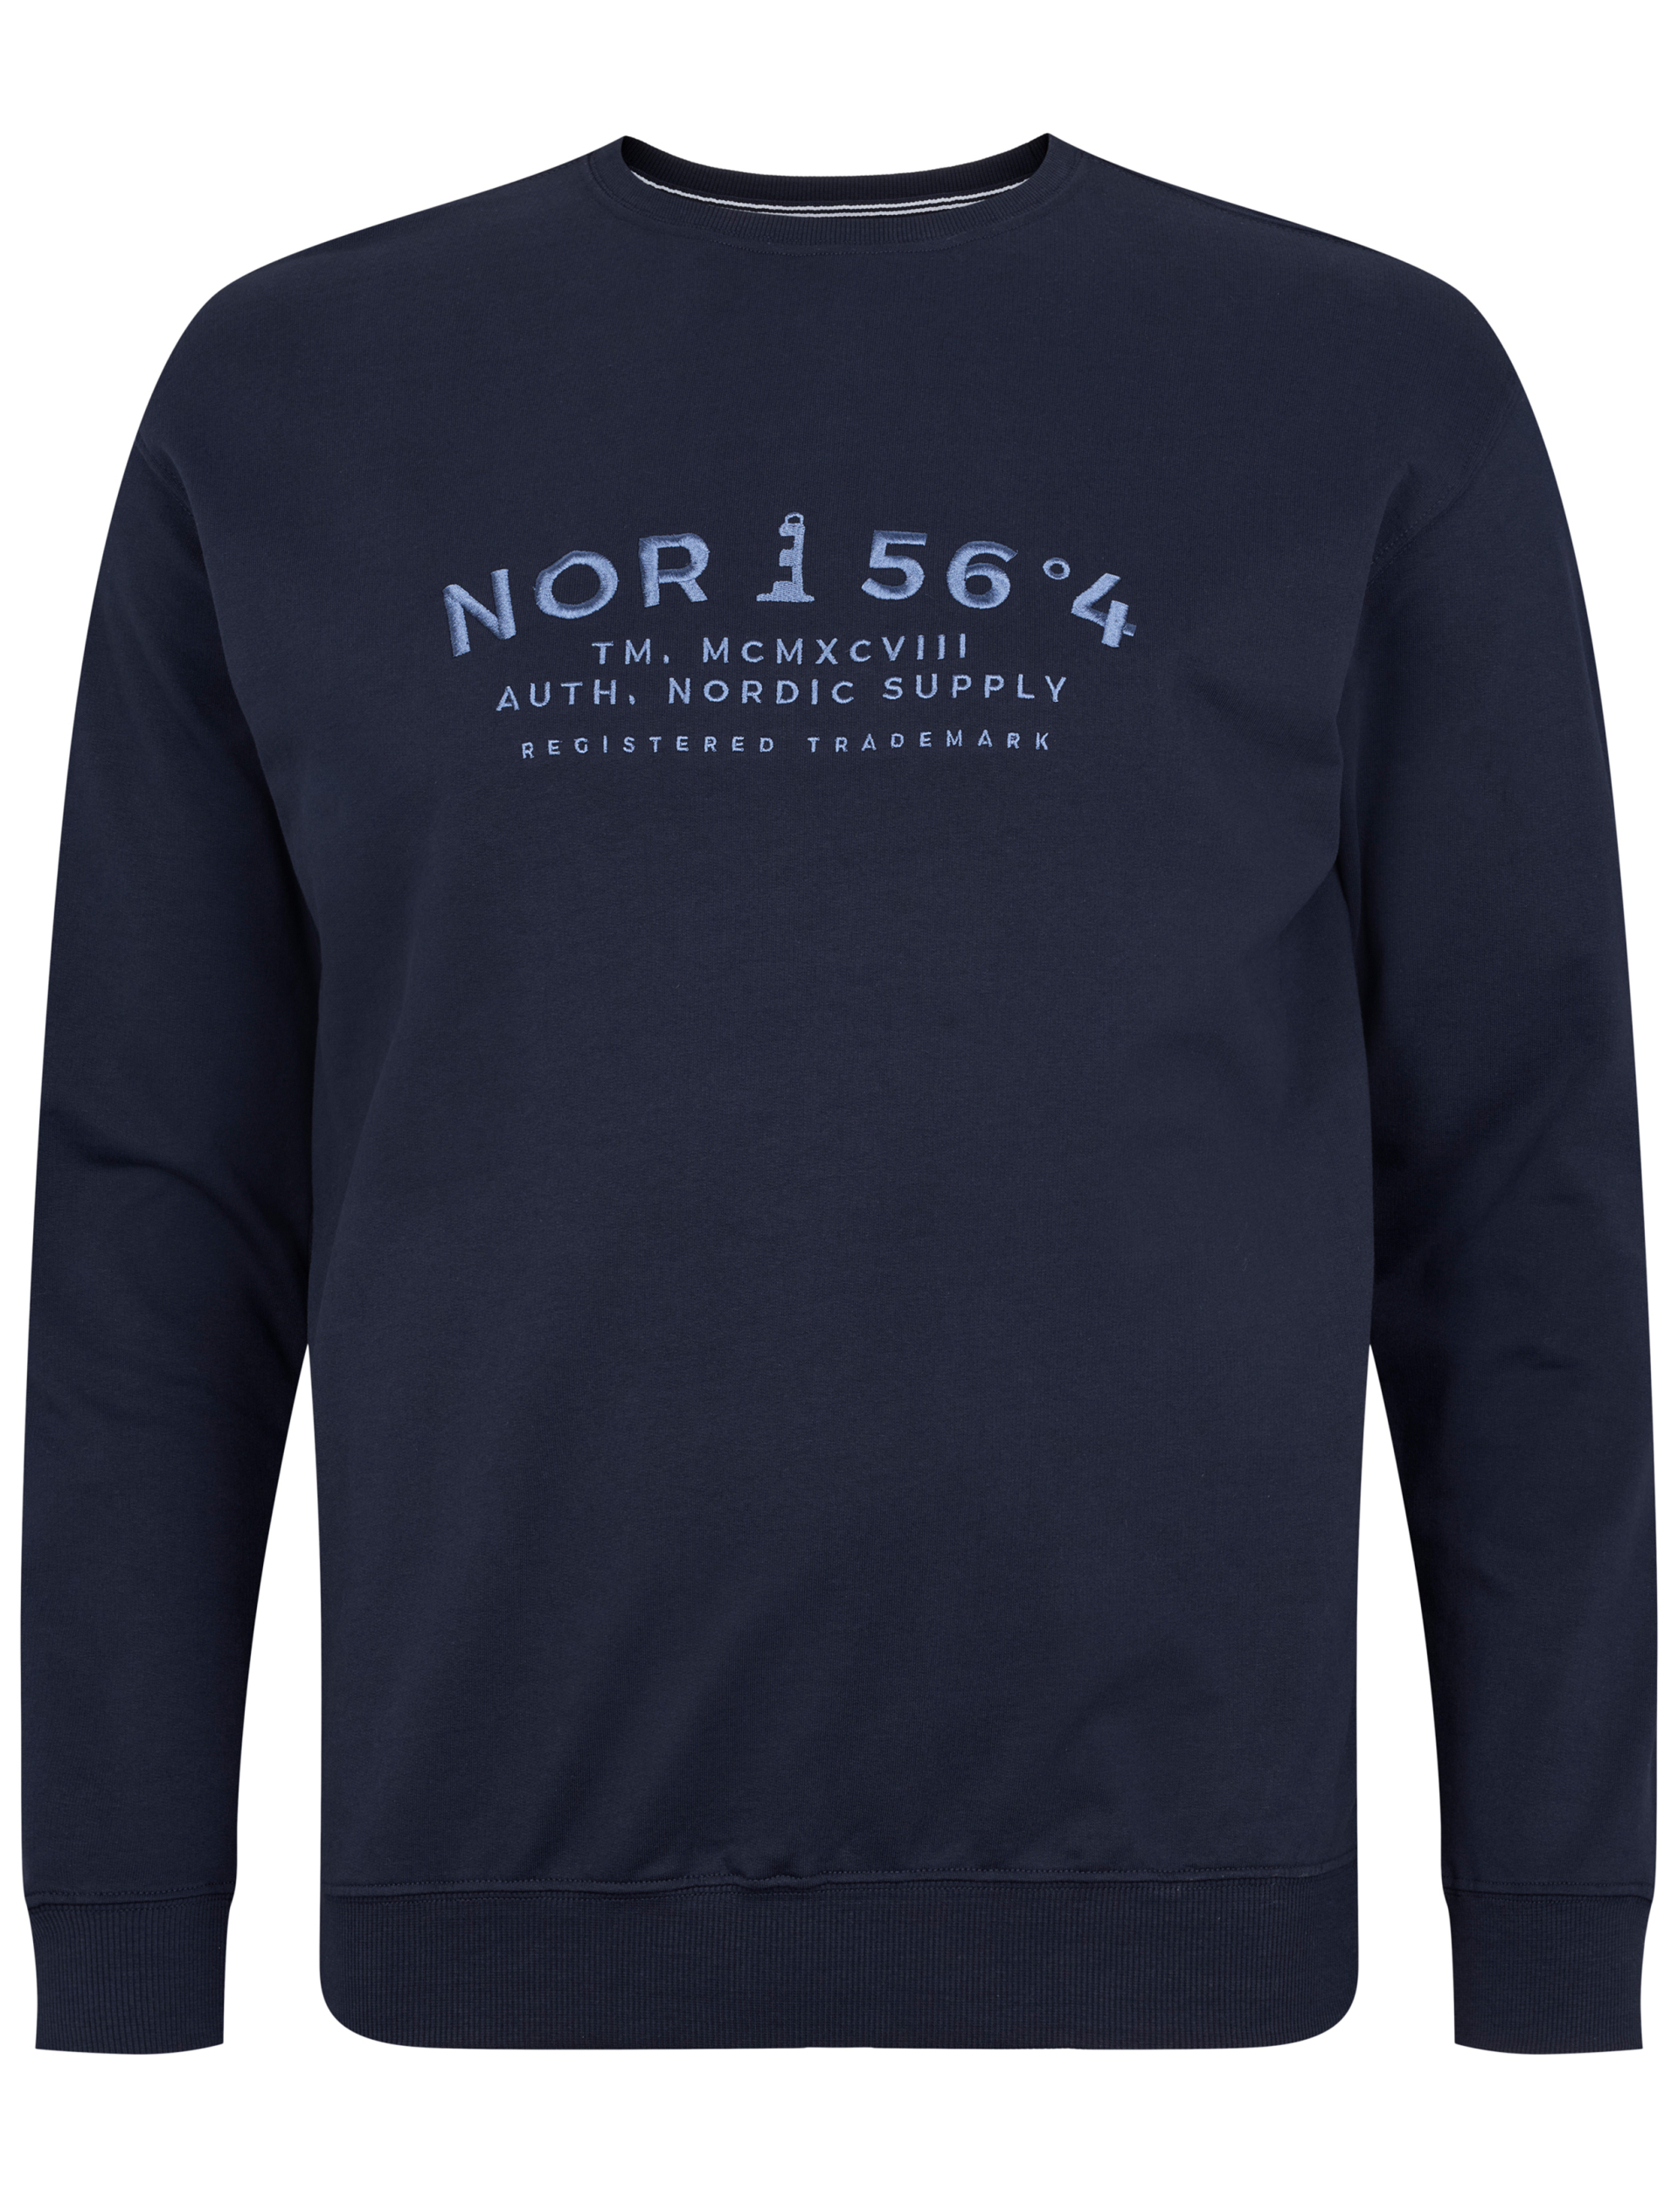 North Sweatshirt blå / 0580 navy